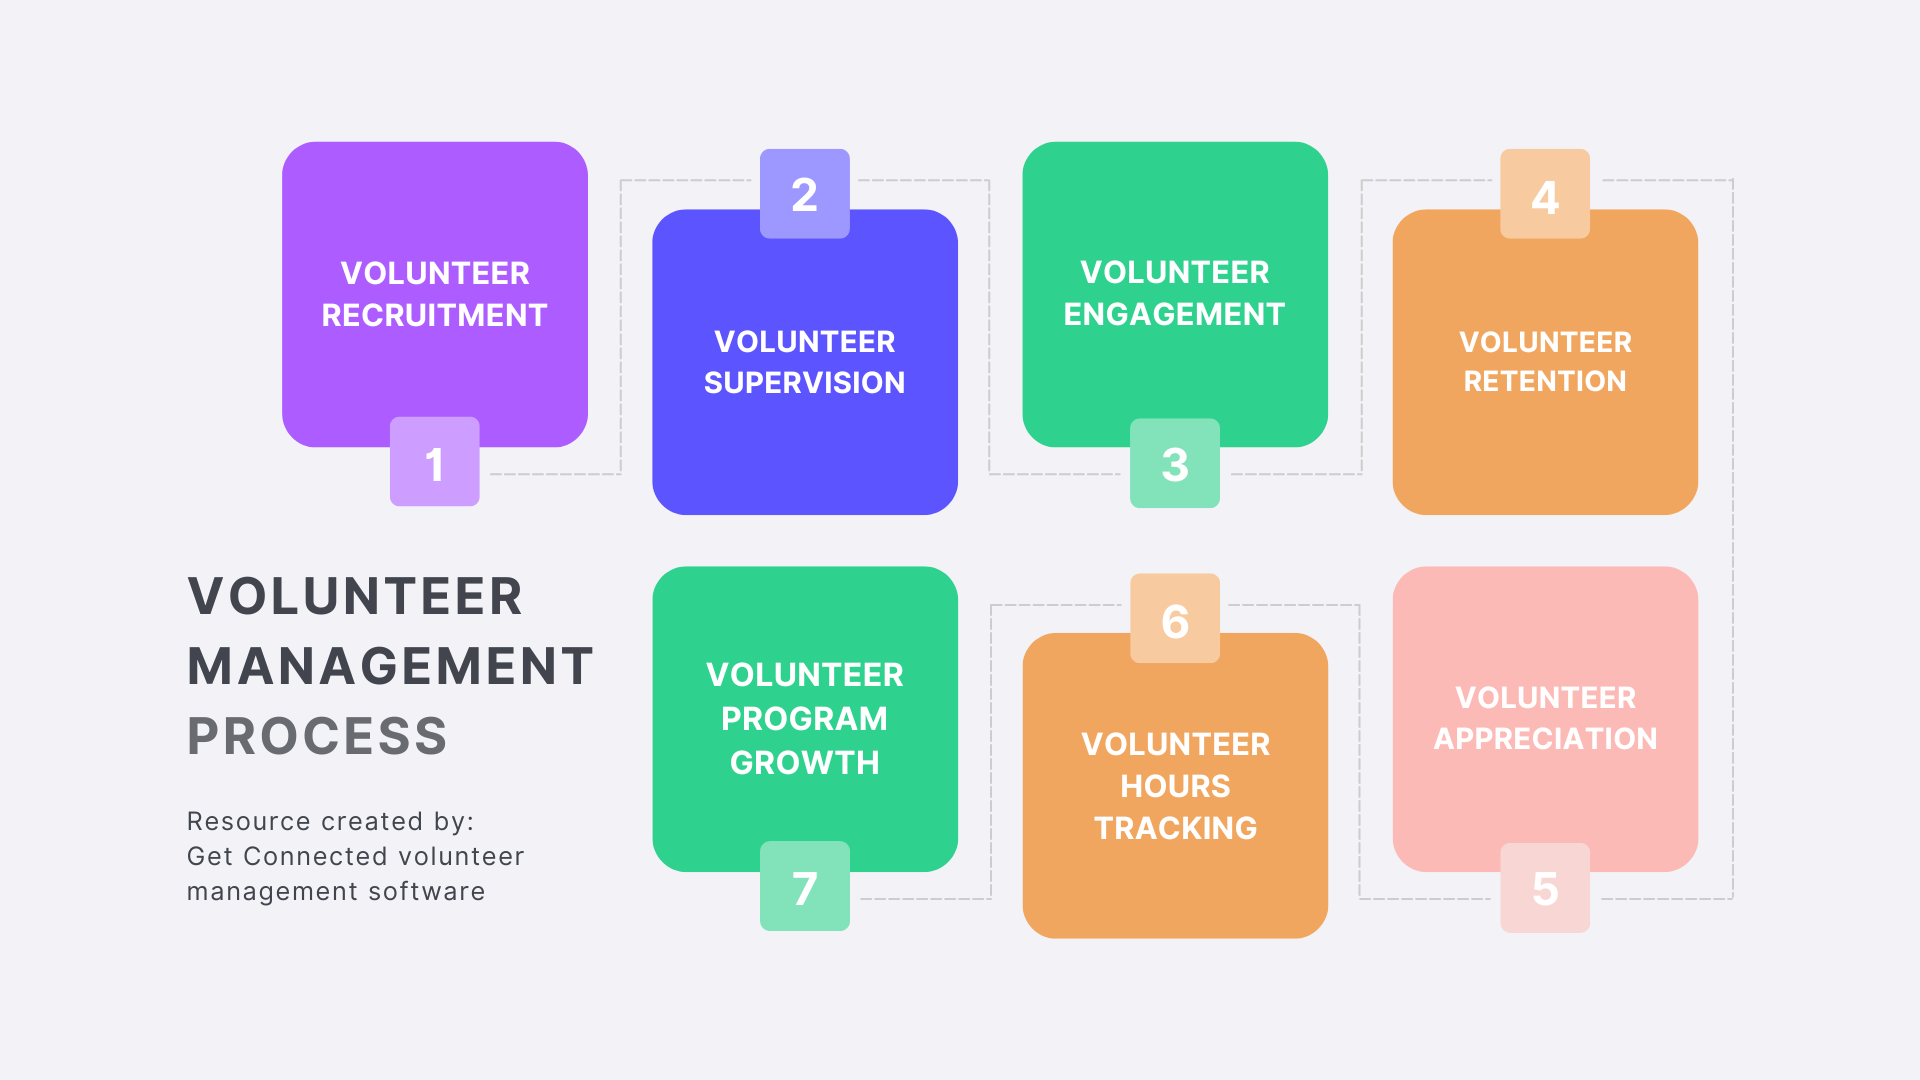 Volunteer management process chart explaining the 5 steps of volunteer management process